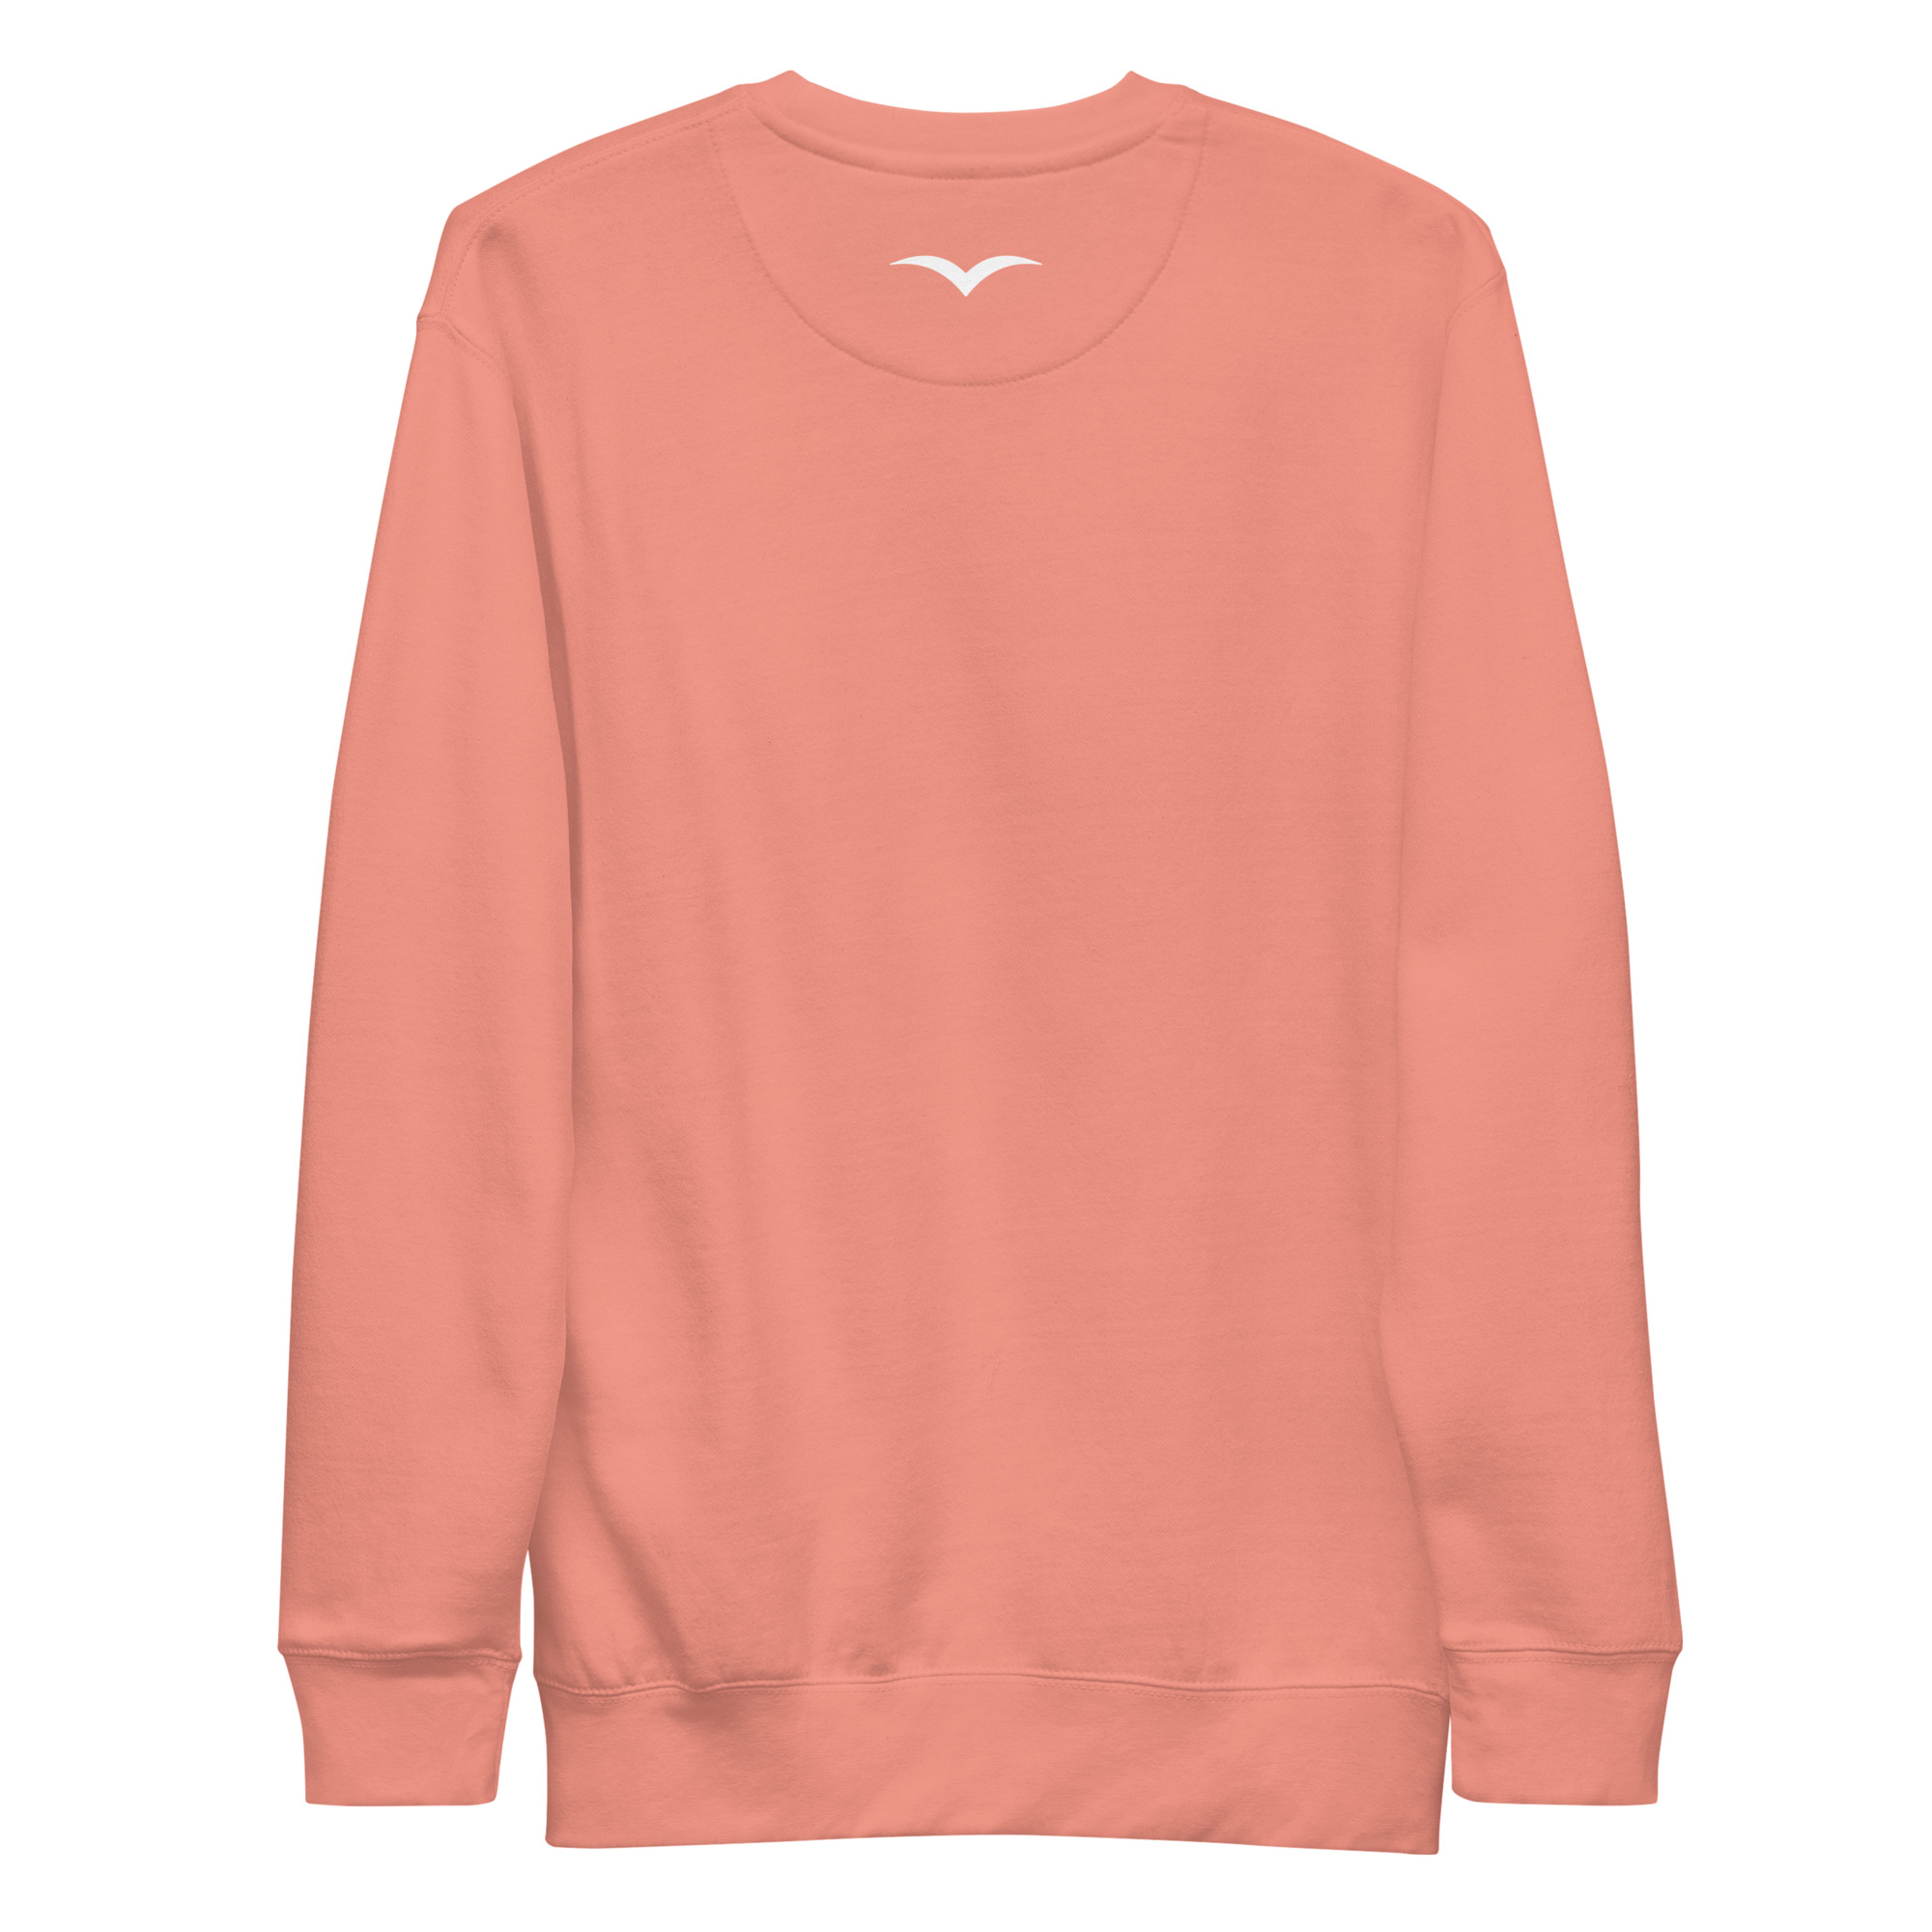 unisex-premium-sweatshirt-dusty-rose-back-64136c9fb24bf.jpg